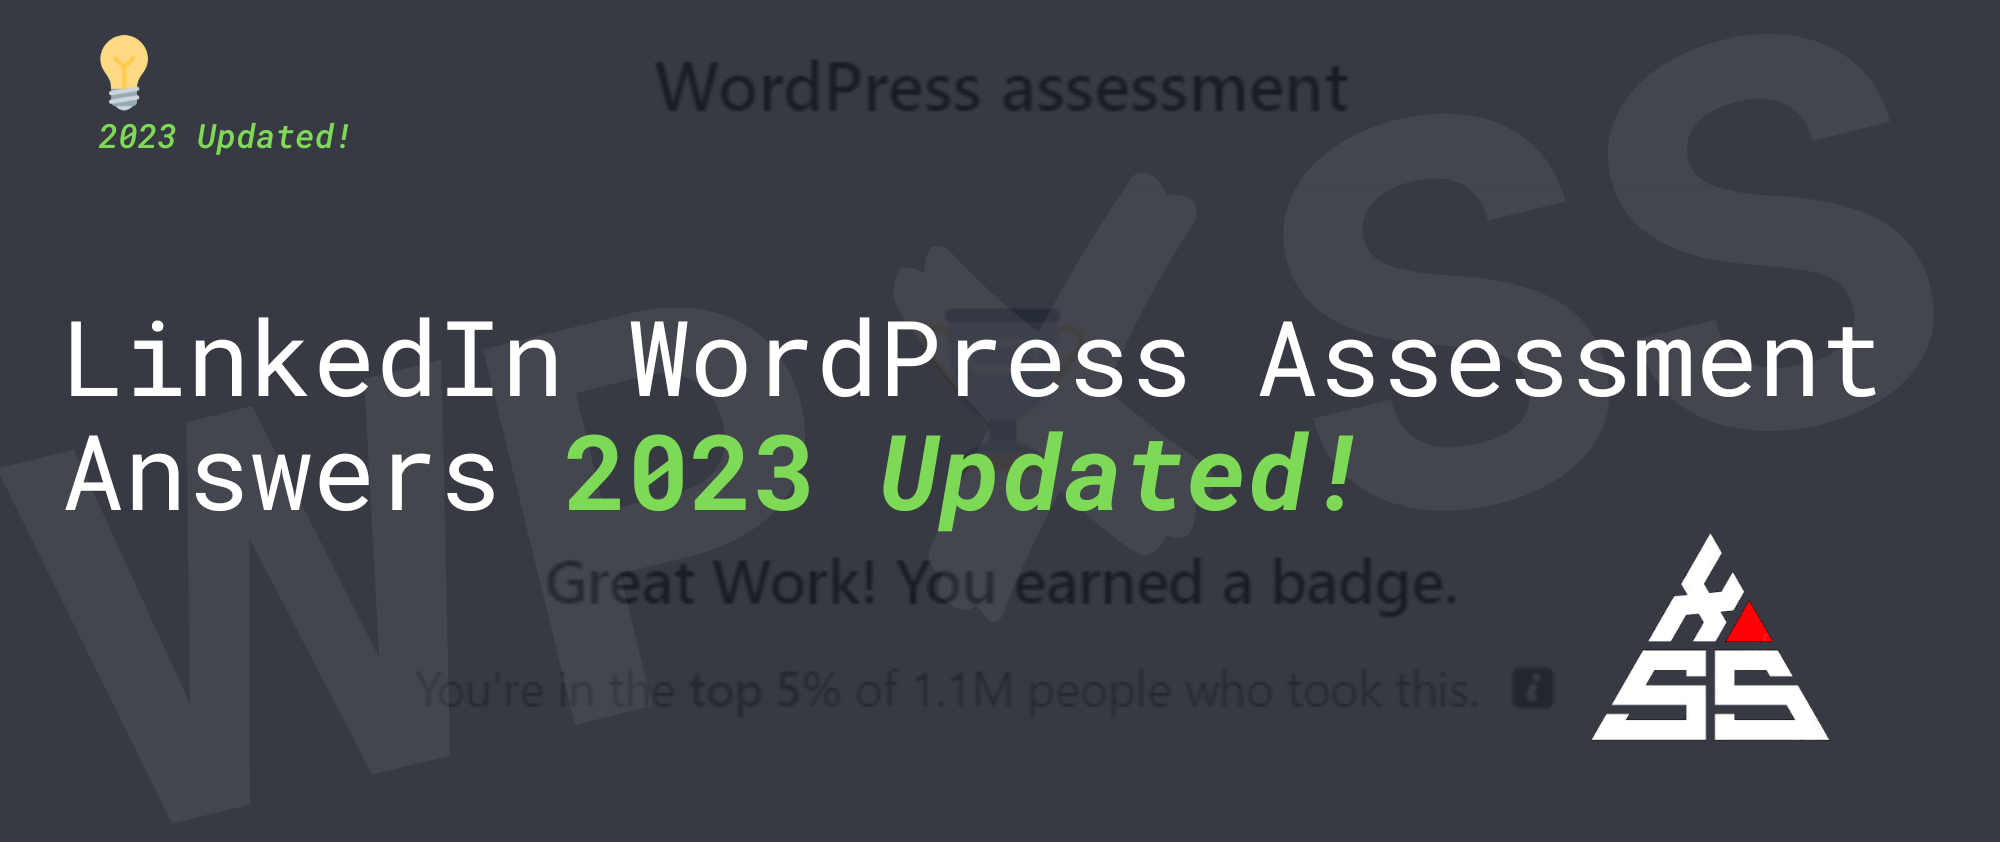 LinkedIn WordPress Assessment Answers 2023